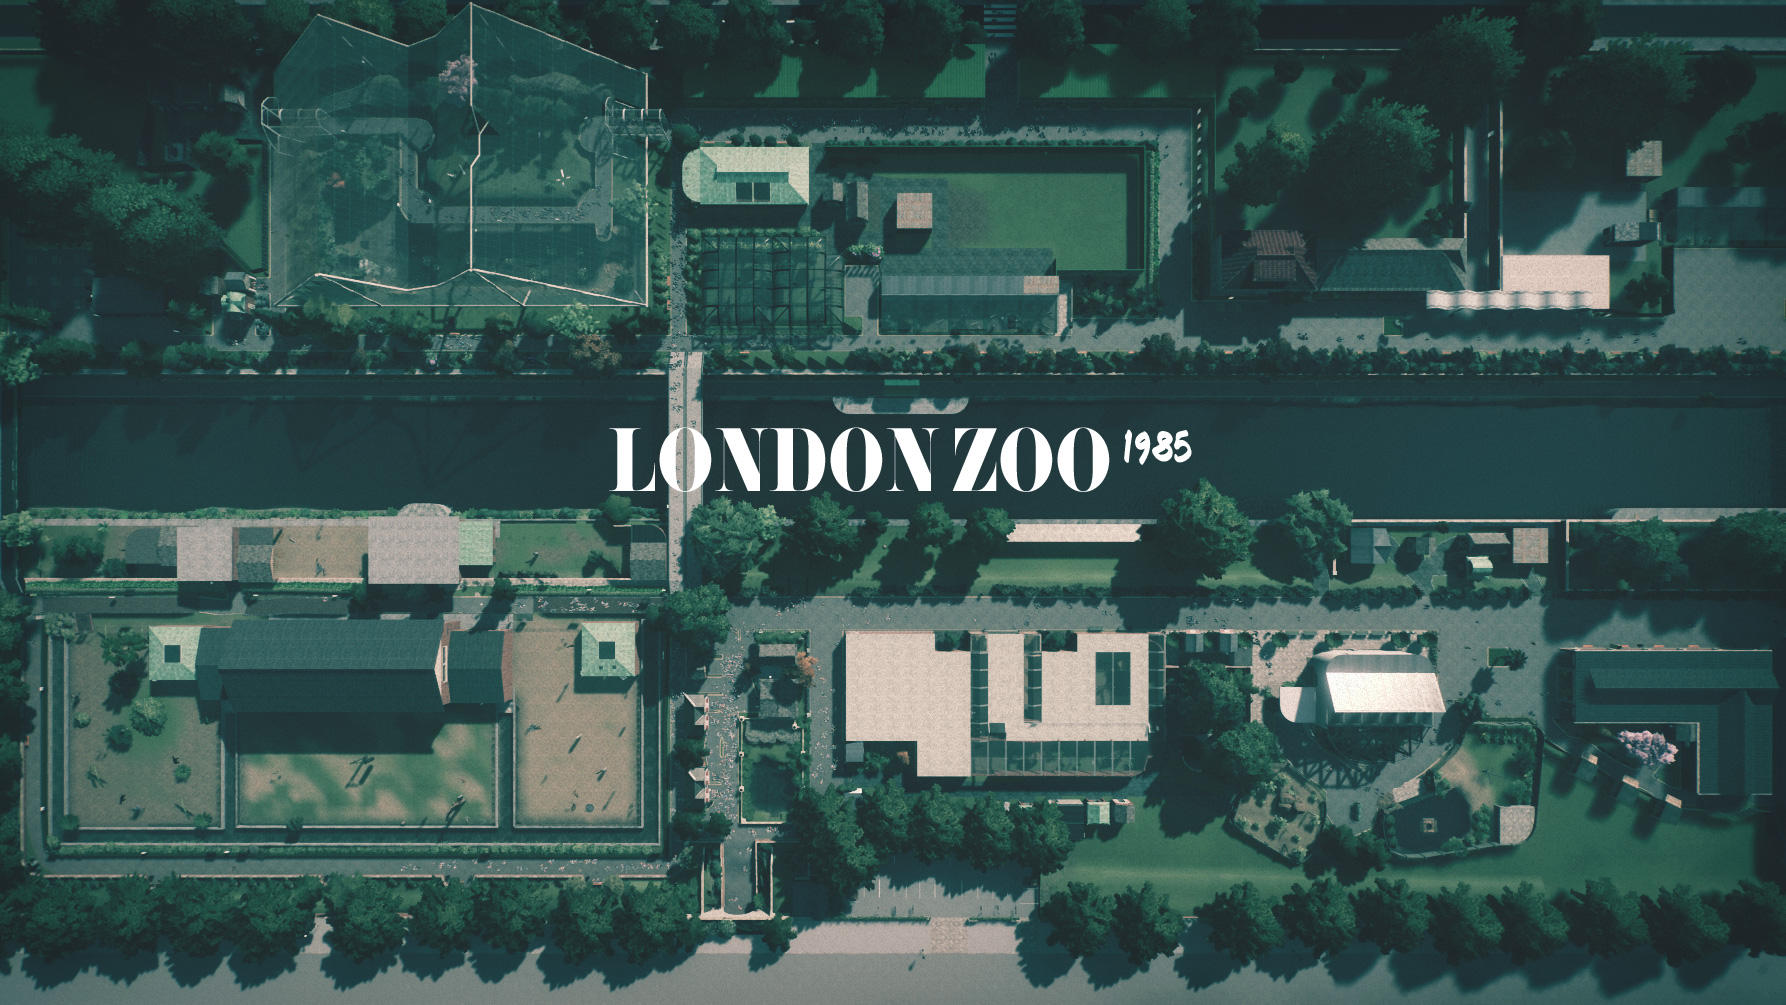 London Zoo 1985 aerial view